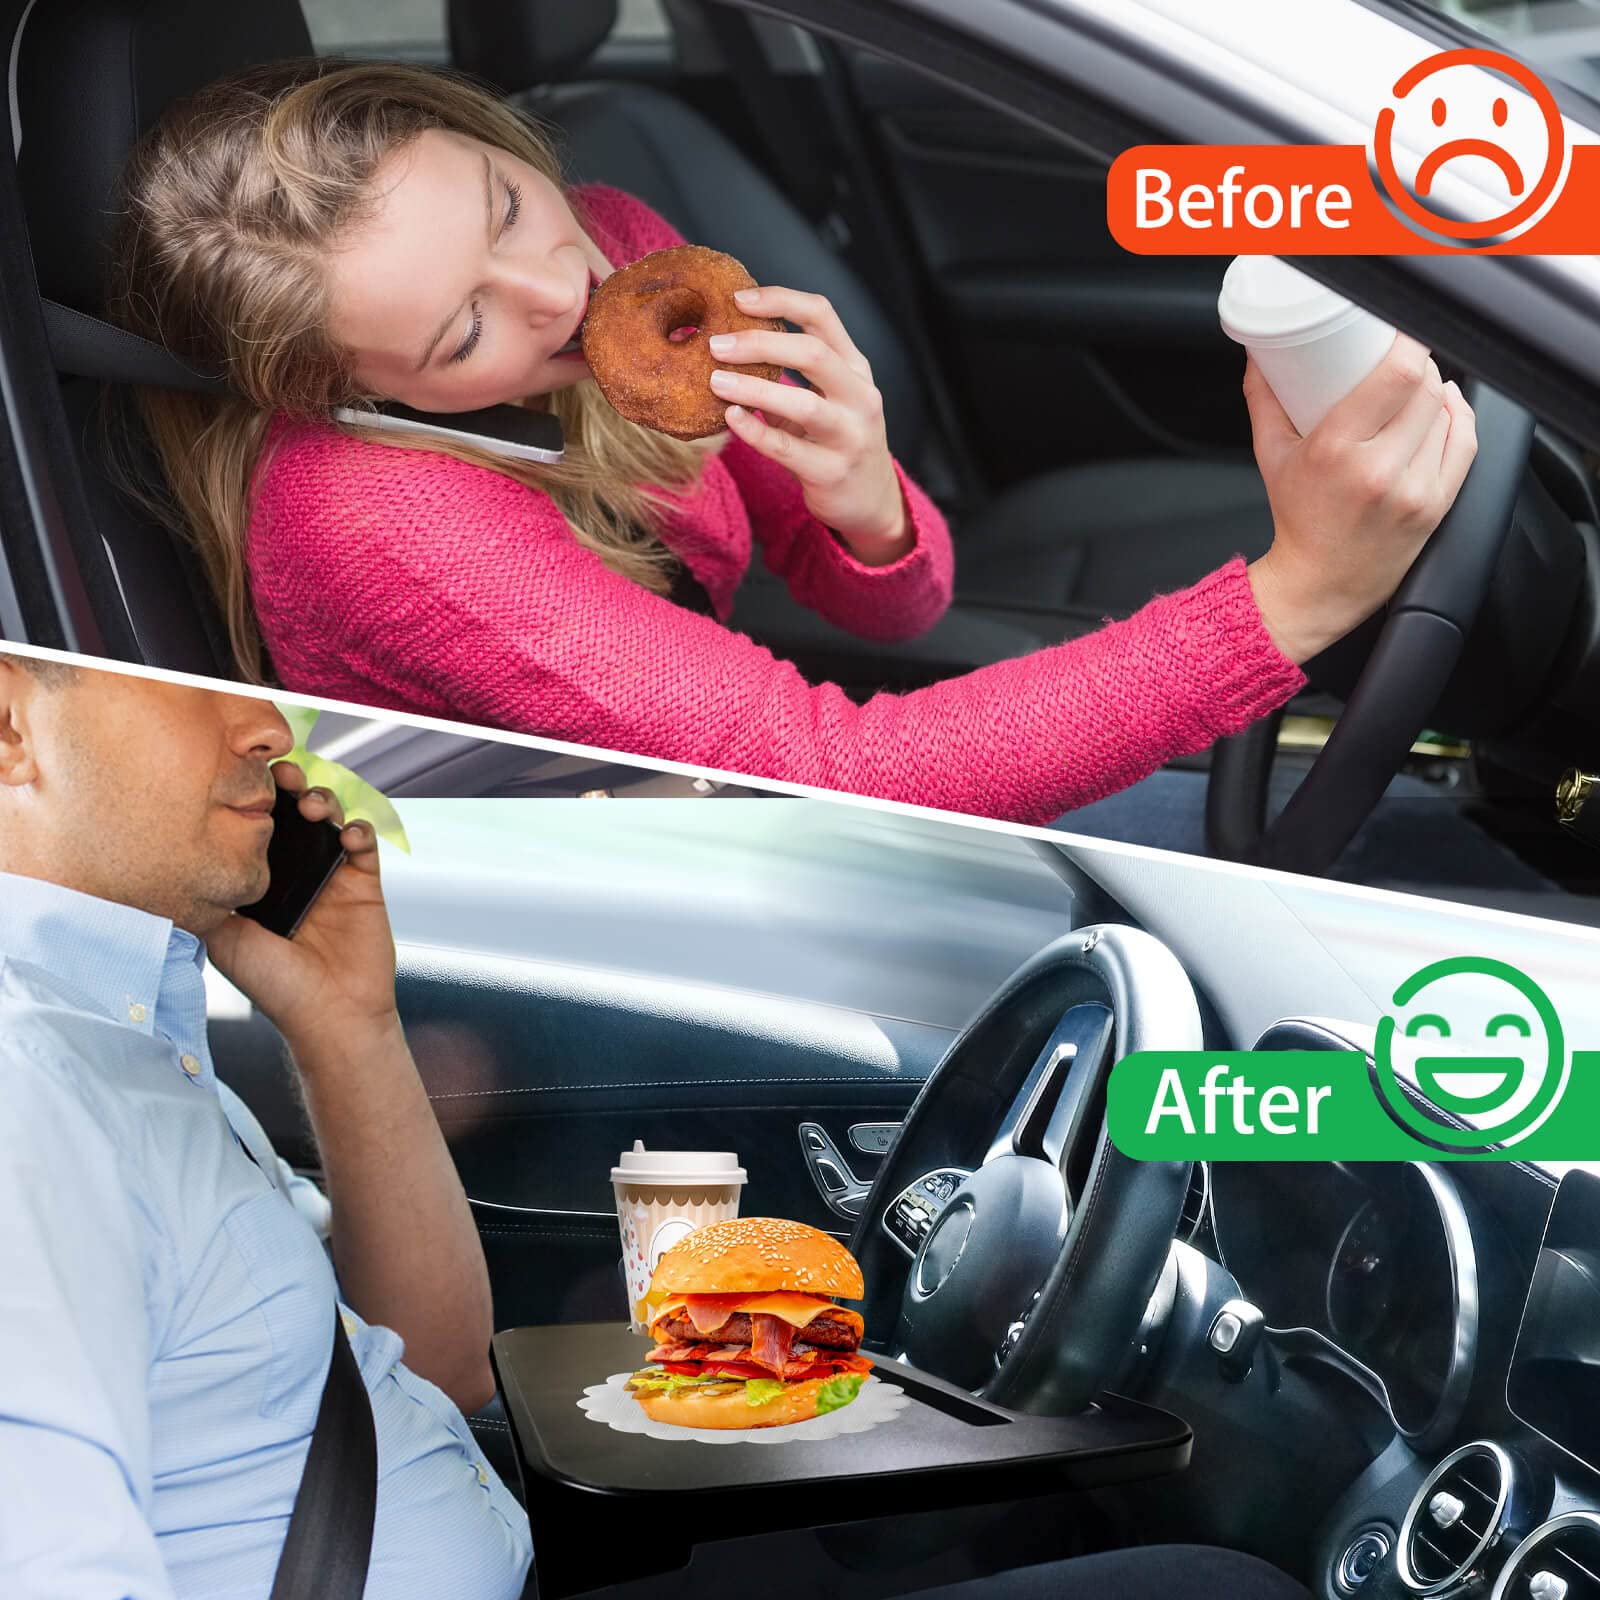 2 in 1 Multipurpose Car Steering Wheel Food Laptop Tray & Seat Gap Filler Organizer with Drinks Holder